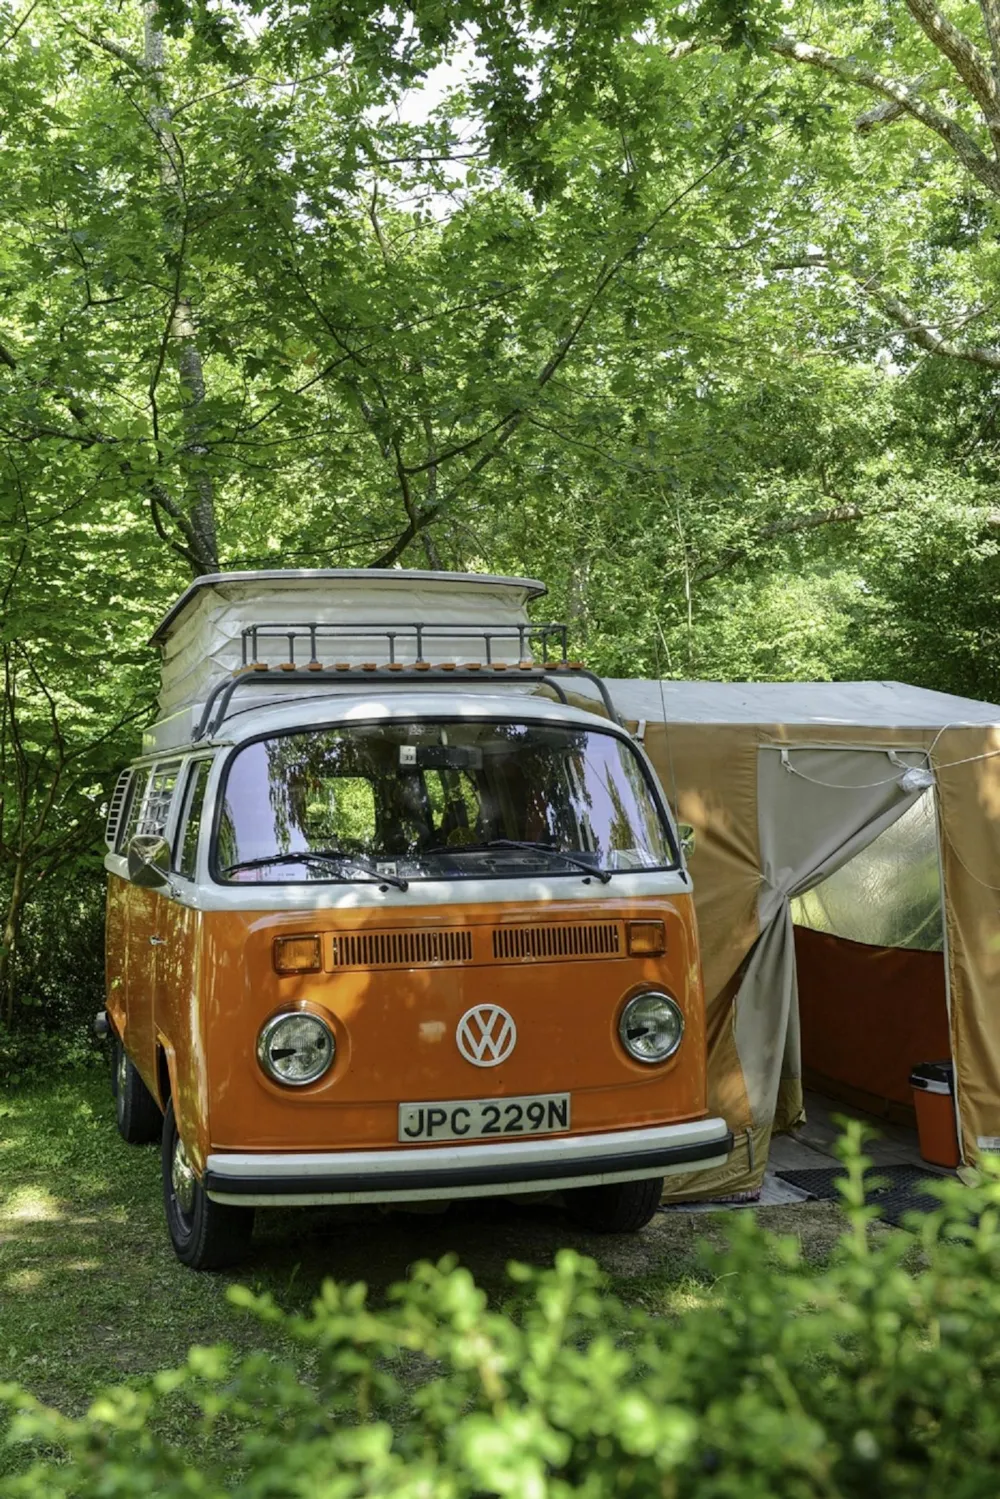 Pitch : Tent / Caravan + car or Motorhome / Truck